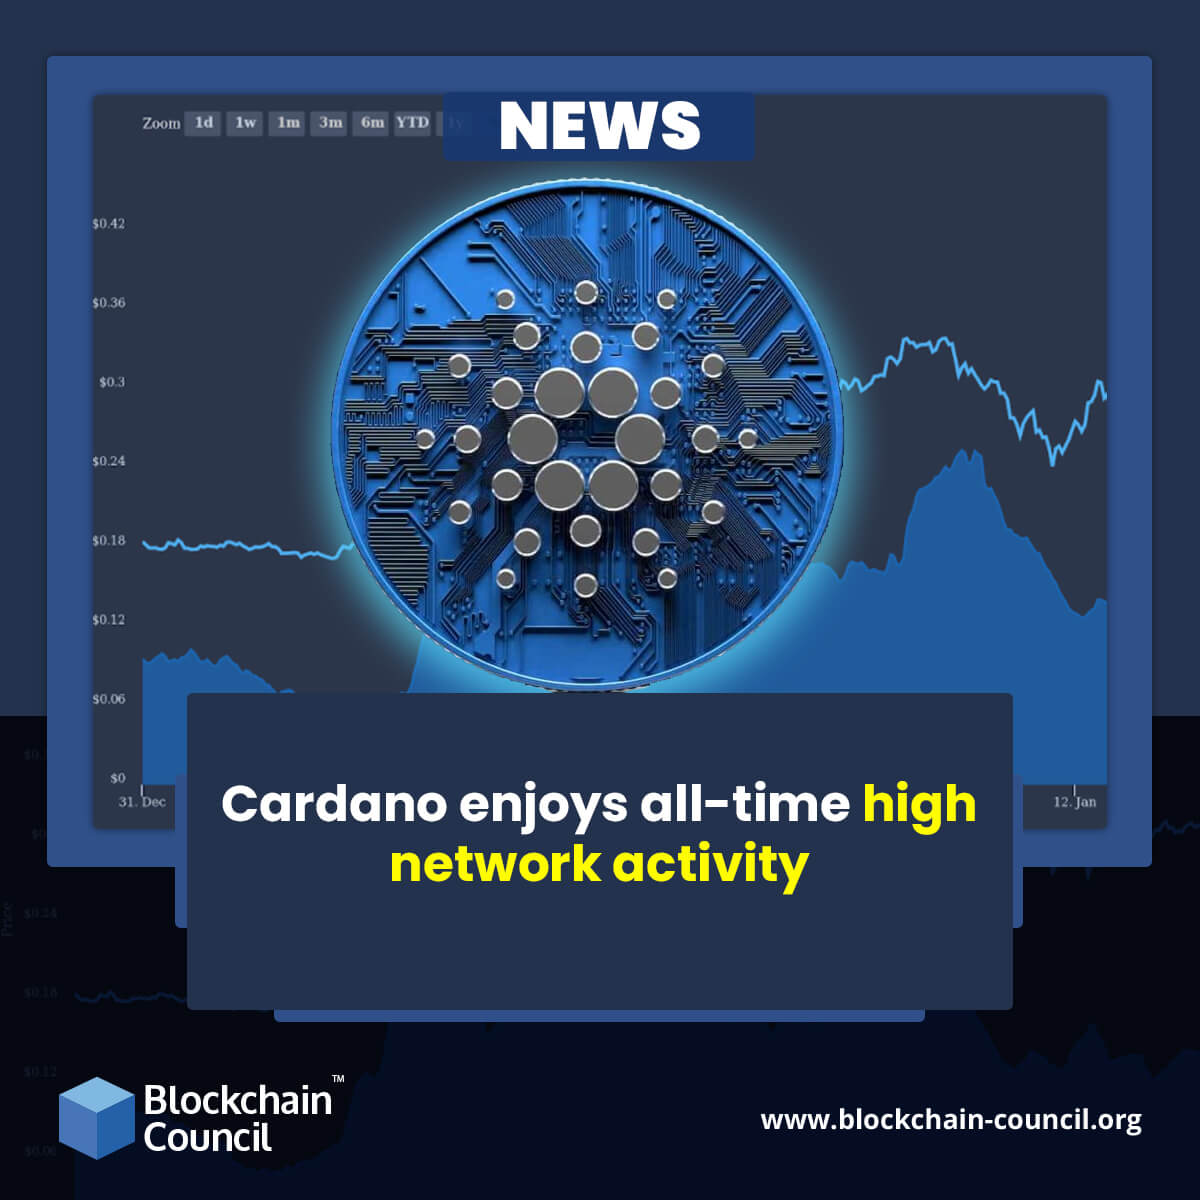 Cardano enjoys all-time high network activity